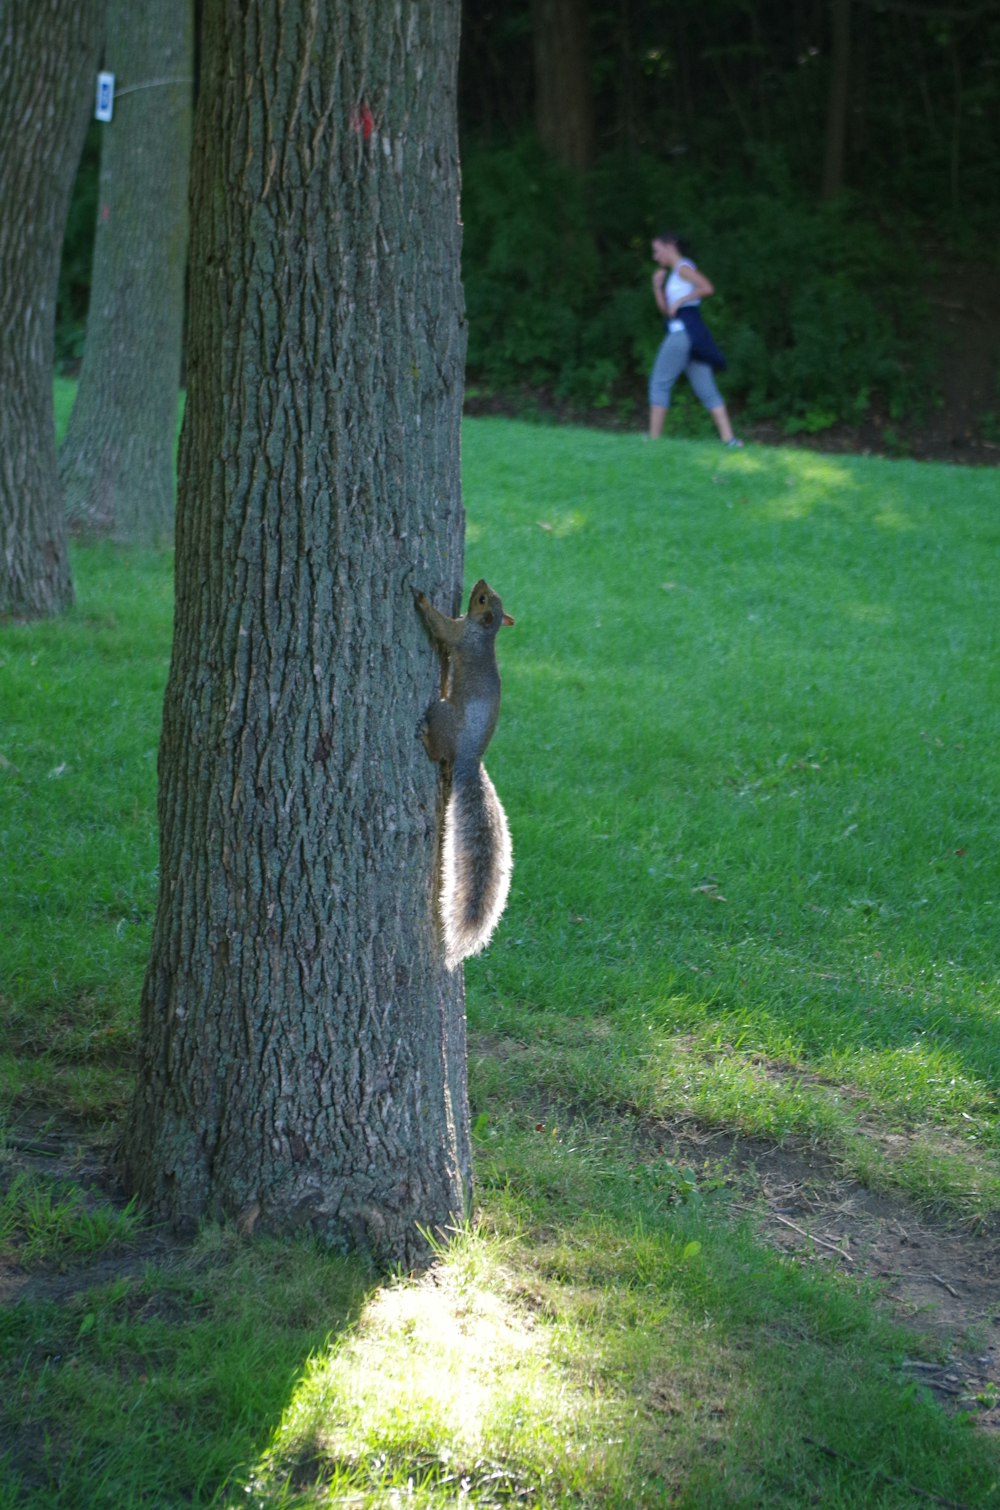 brown squirrel on green grass field during daytime